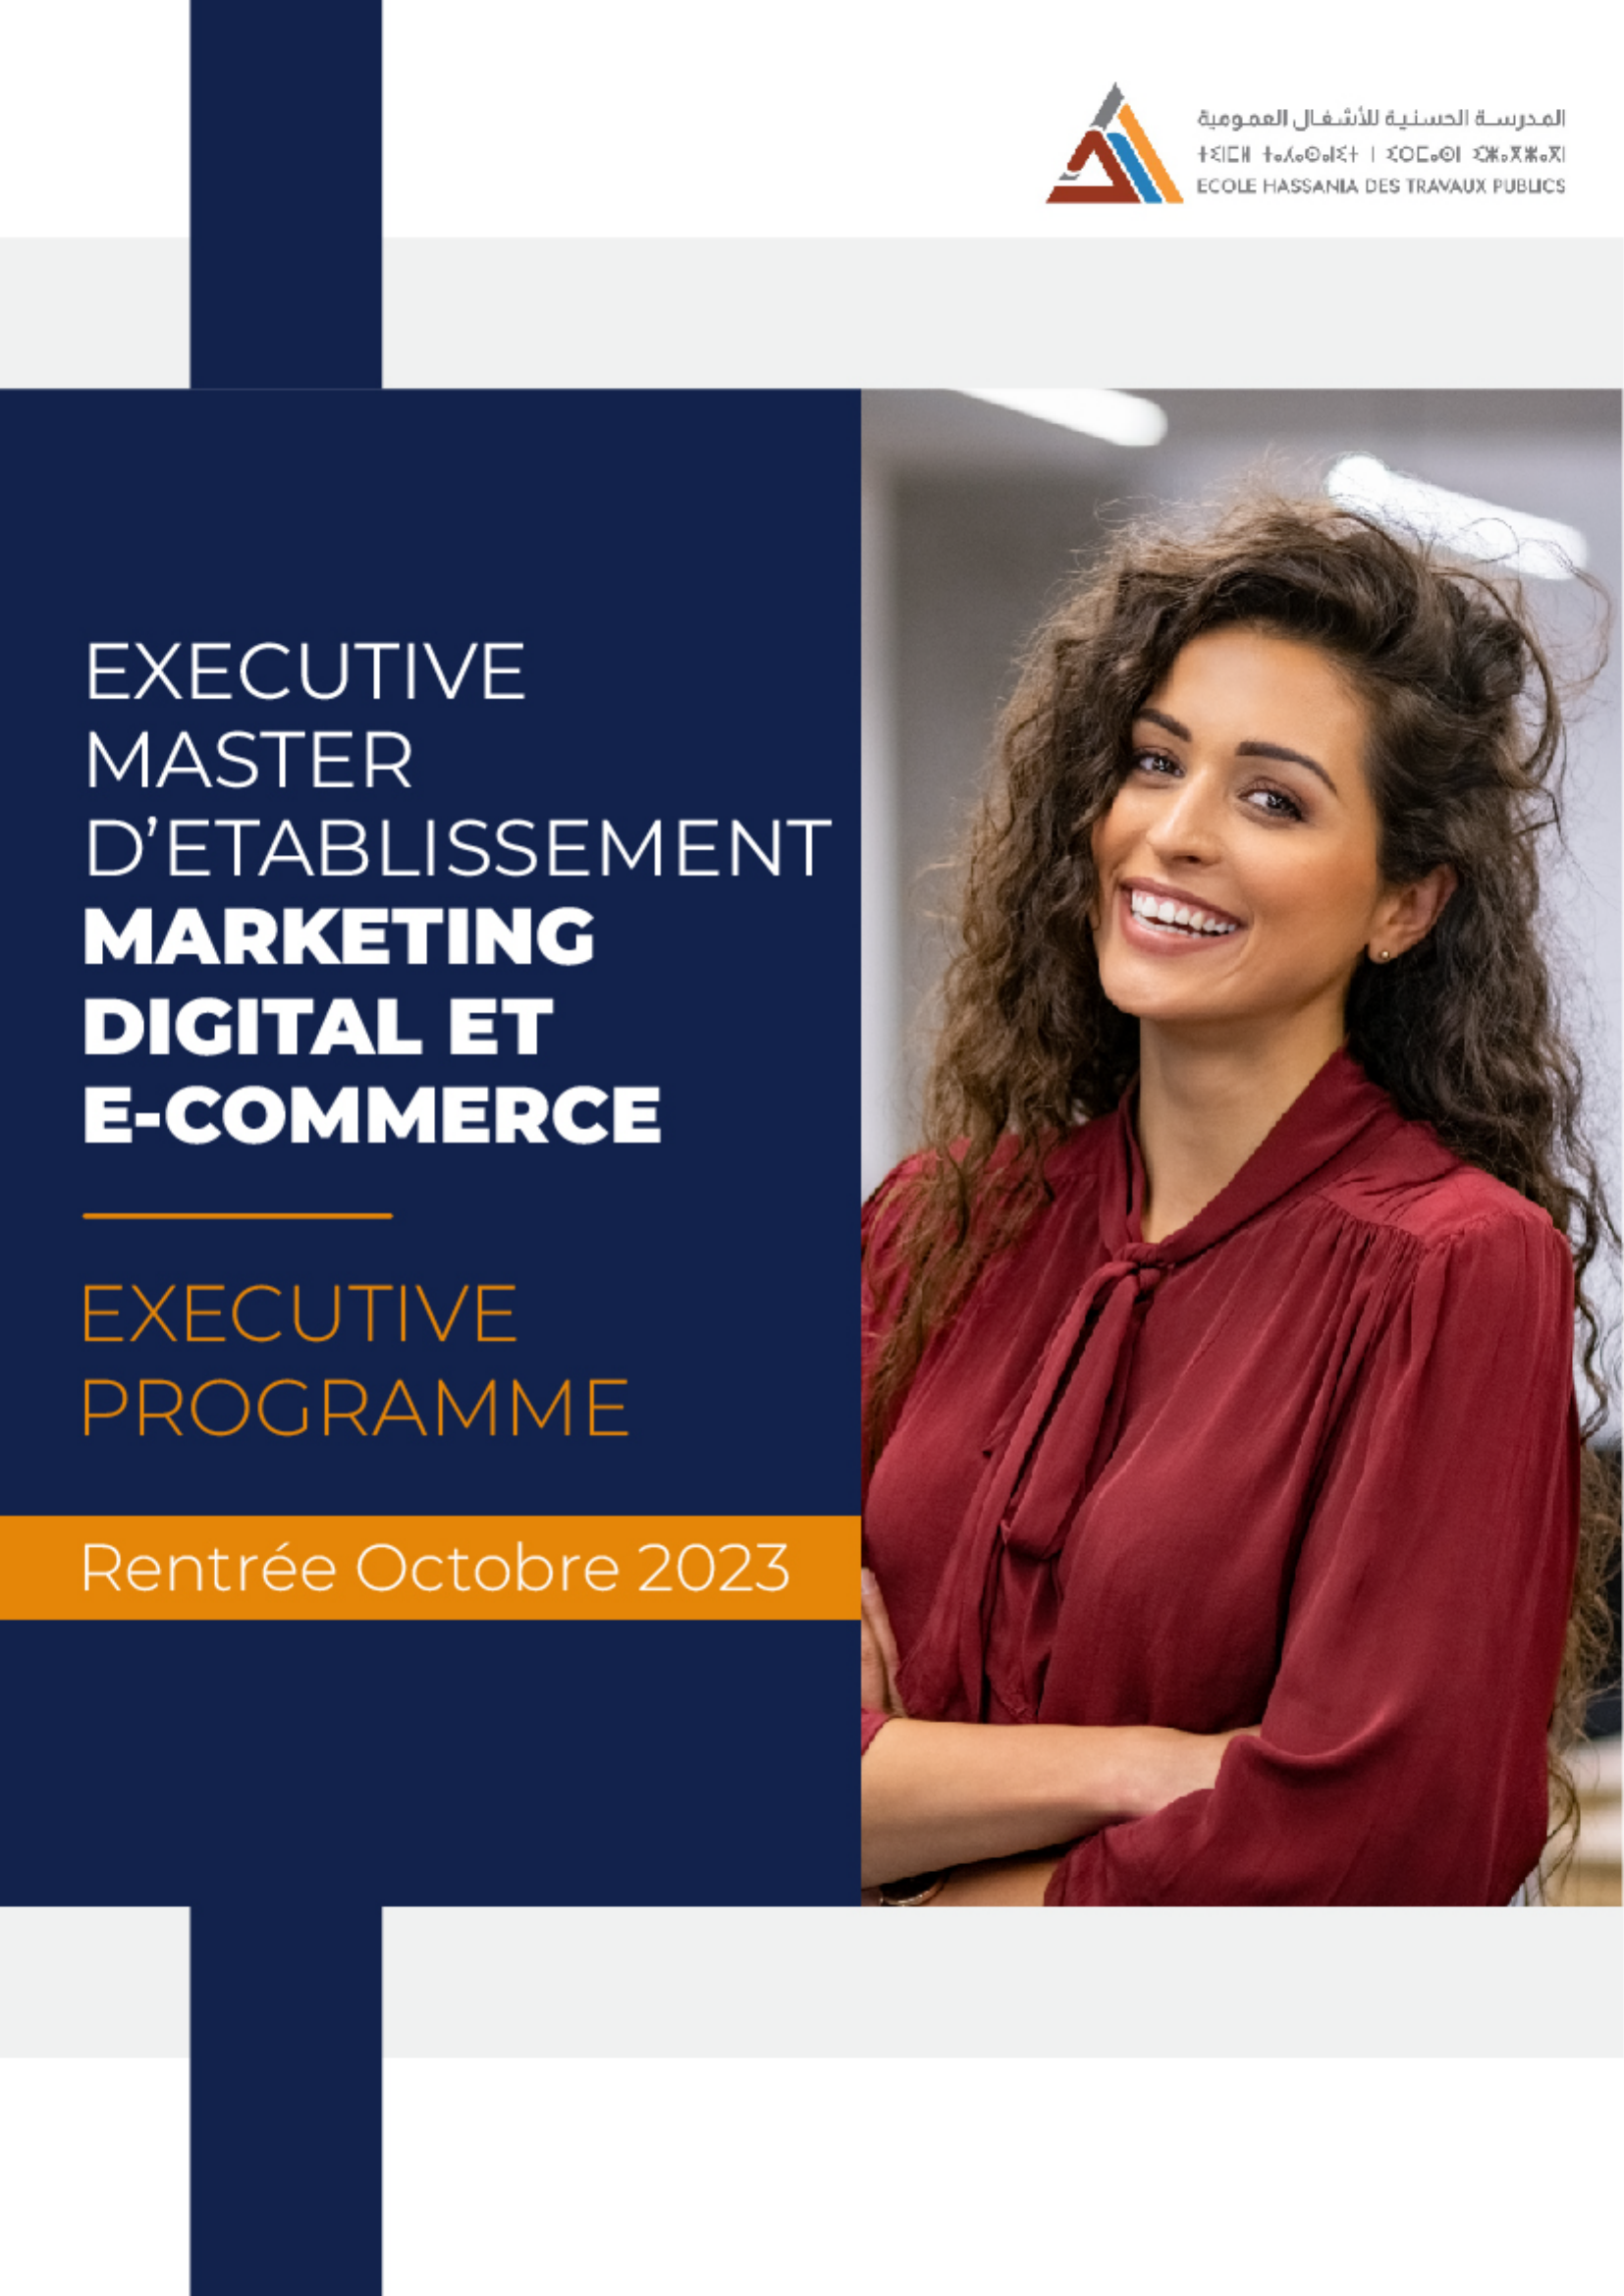 Brochure Executive Master Marketing Digital et E commerce sans intervenants 21